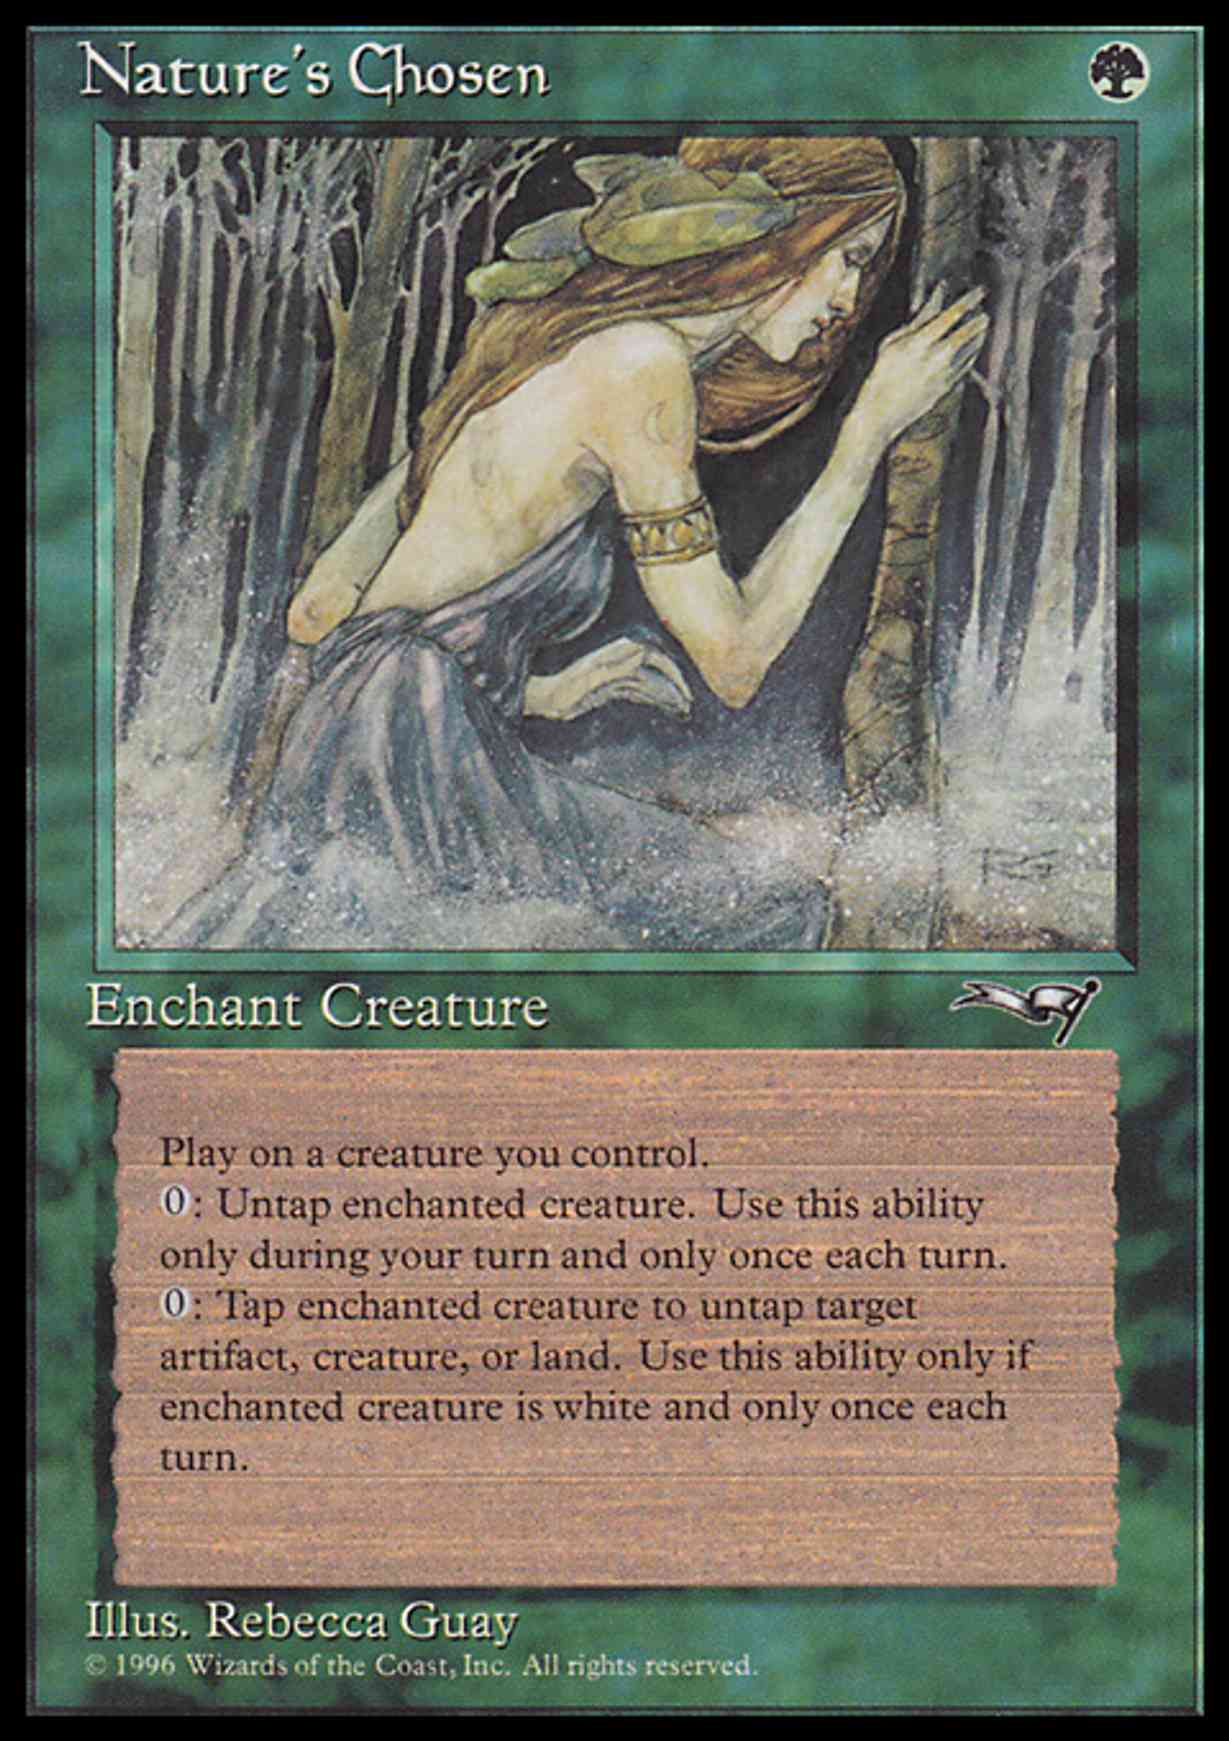 Nature's Chosen magic card front